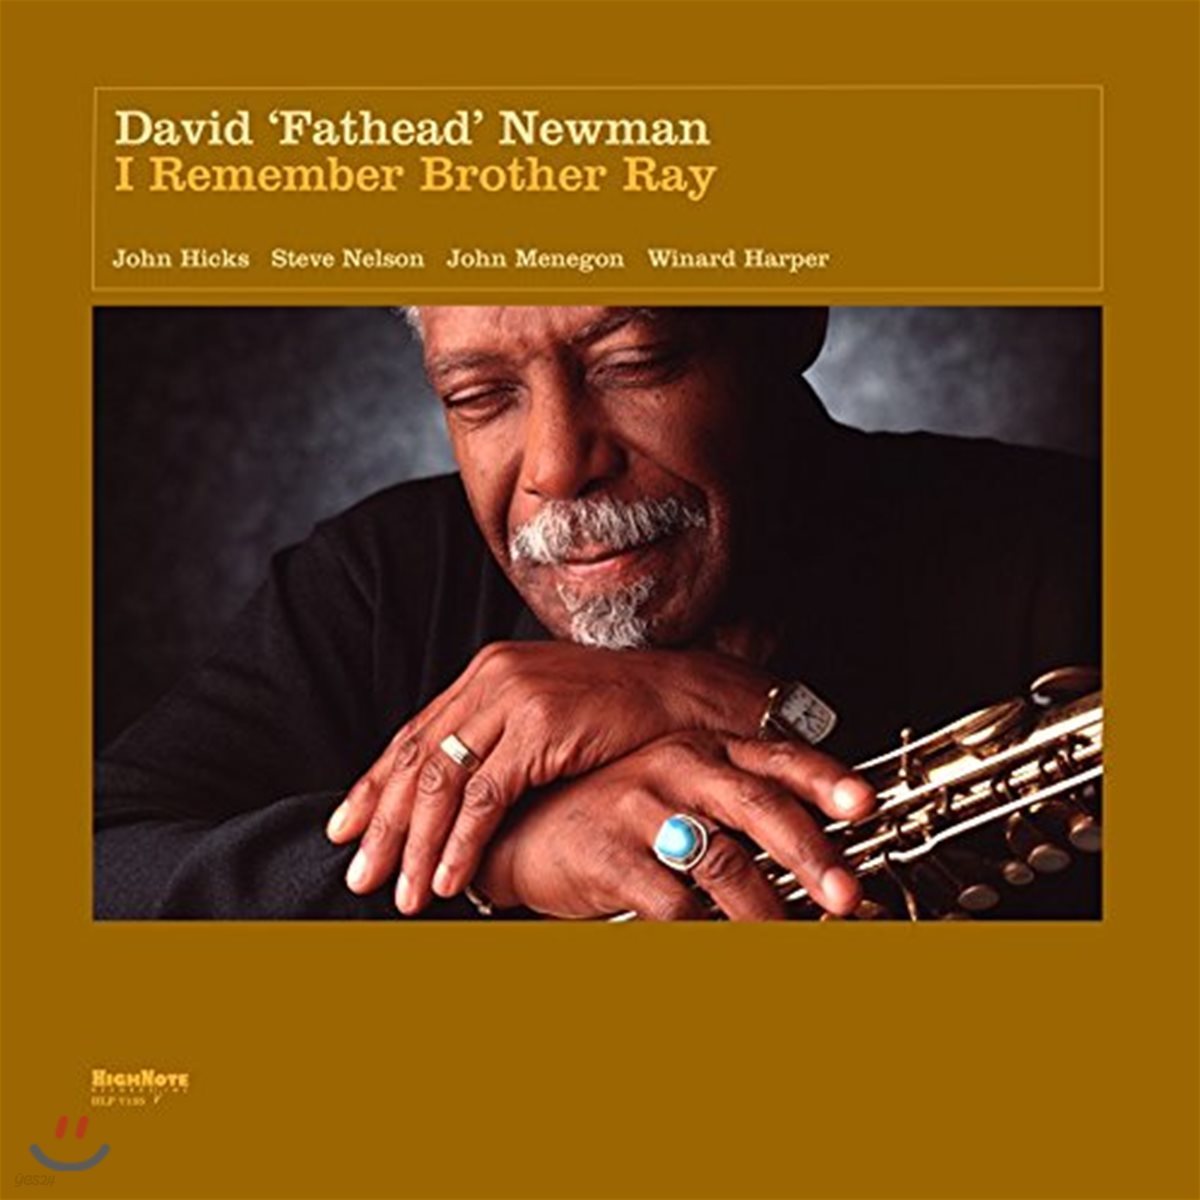 David Fathead Newman - I Remember Brother Ray 